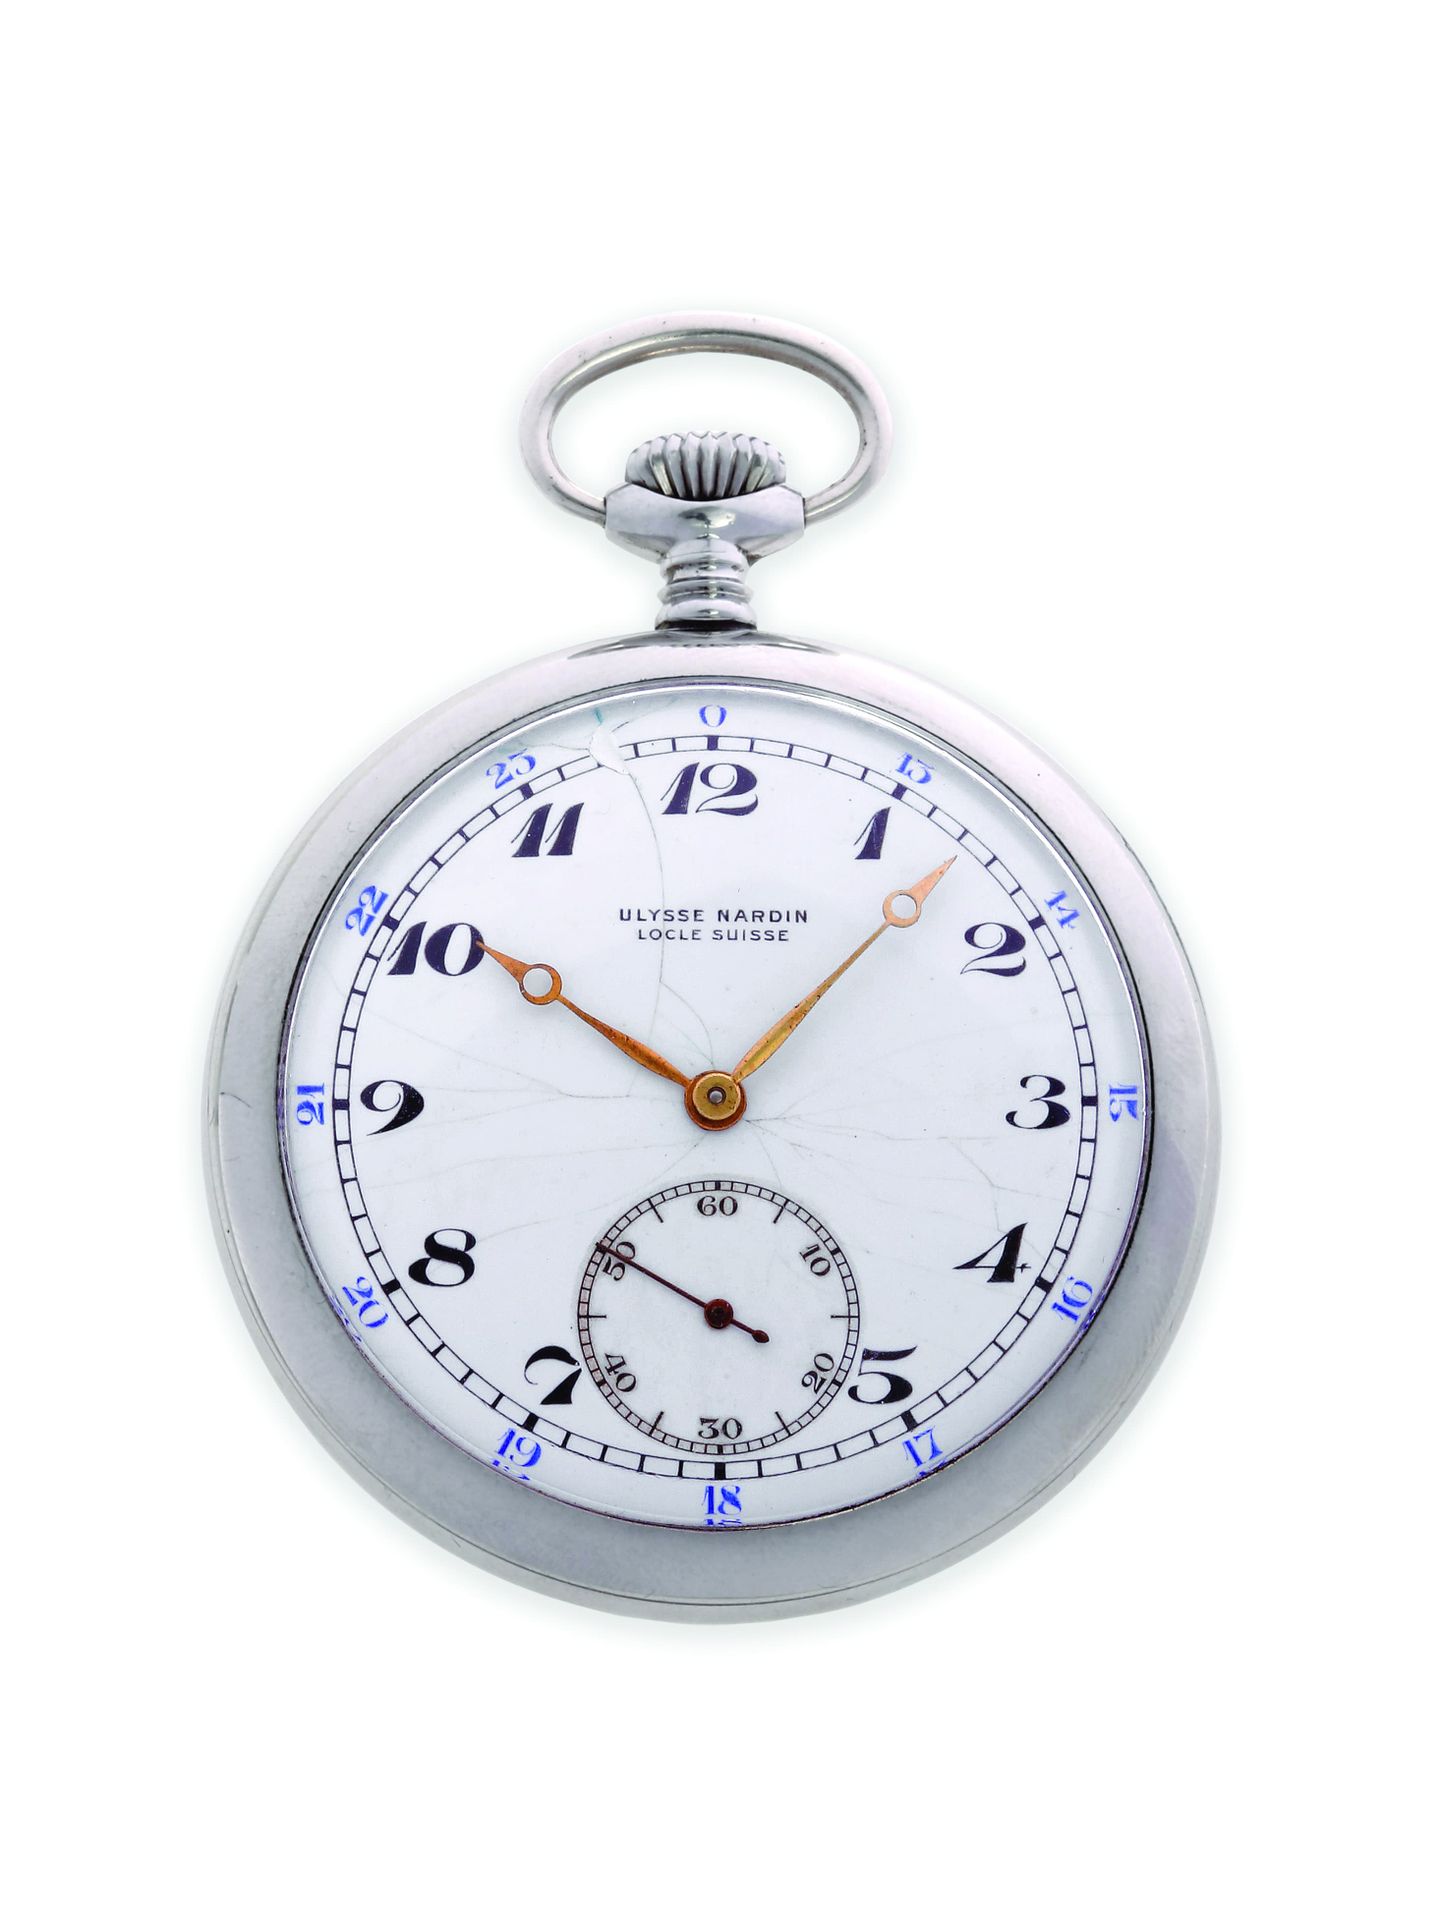 ULYSSE NARDIN Classic
900 thousandths silver pocket watch with mechanical moveme&hellip;